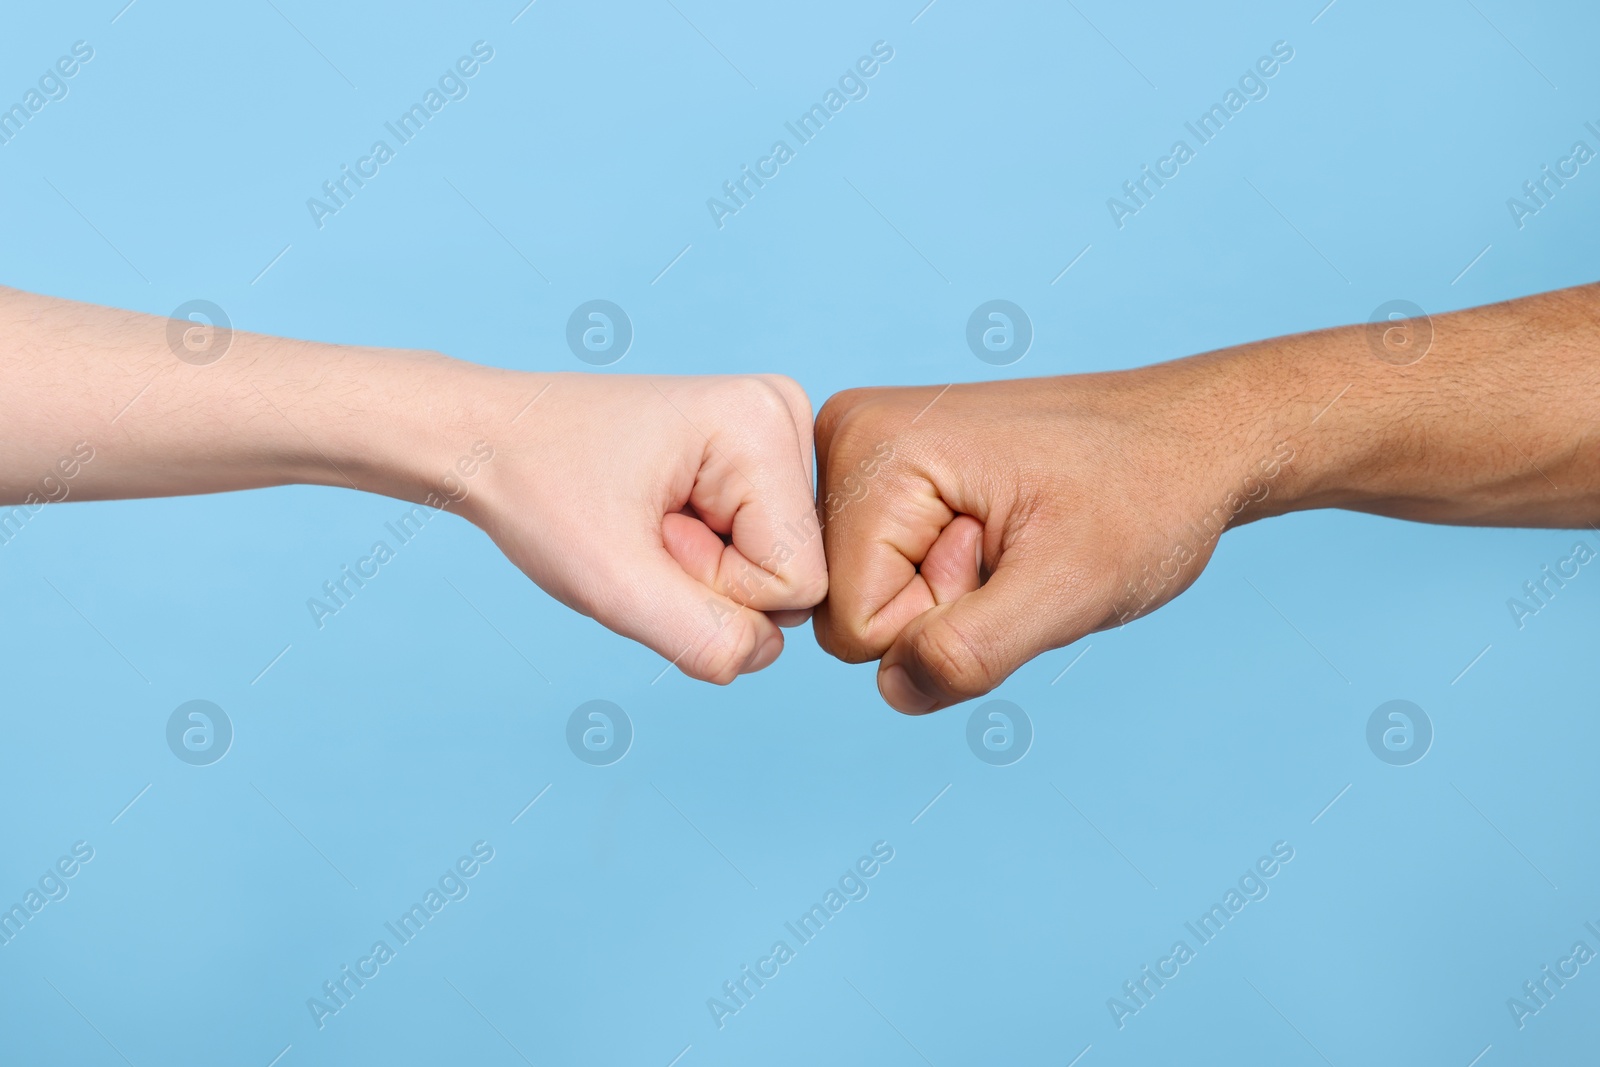 Photo of International relationships. People making fist bump on light blue background, closeup